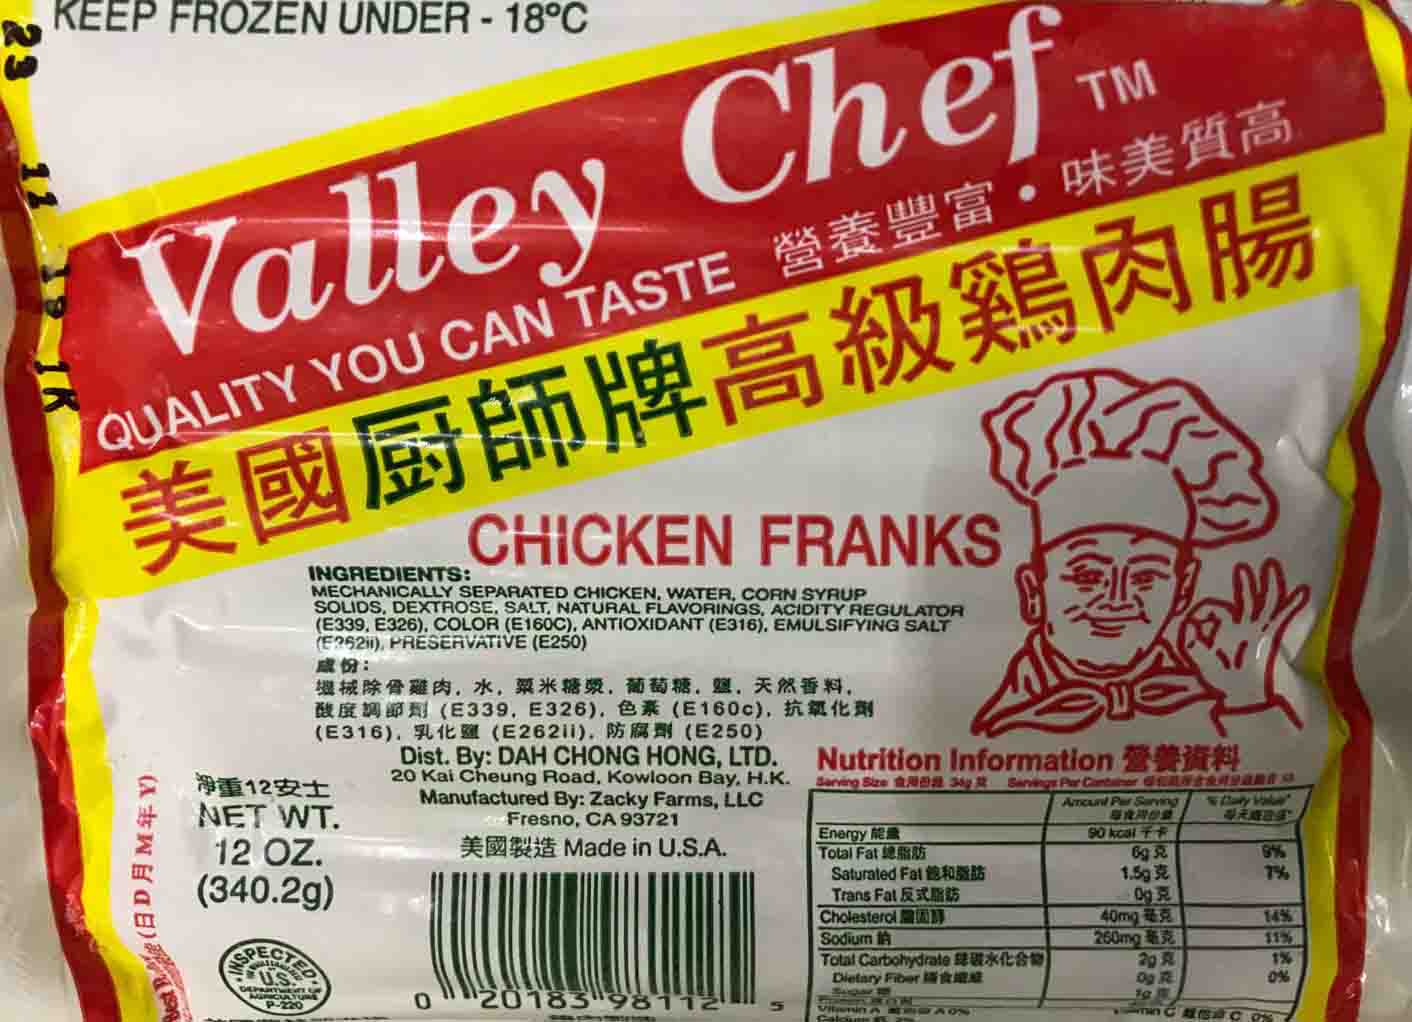 American-made "Valley Chef" chicken sausage